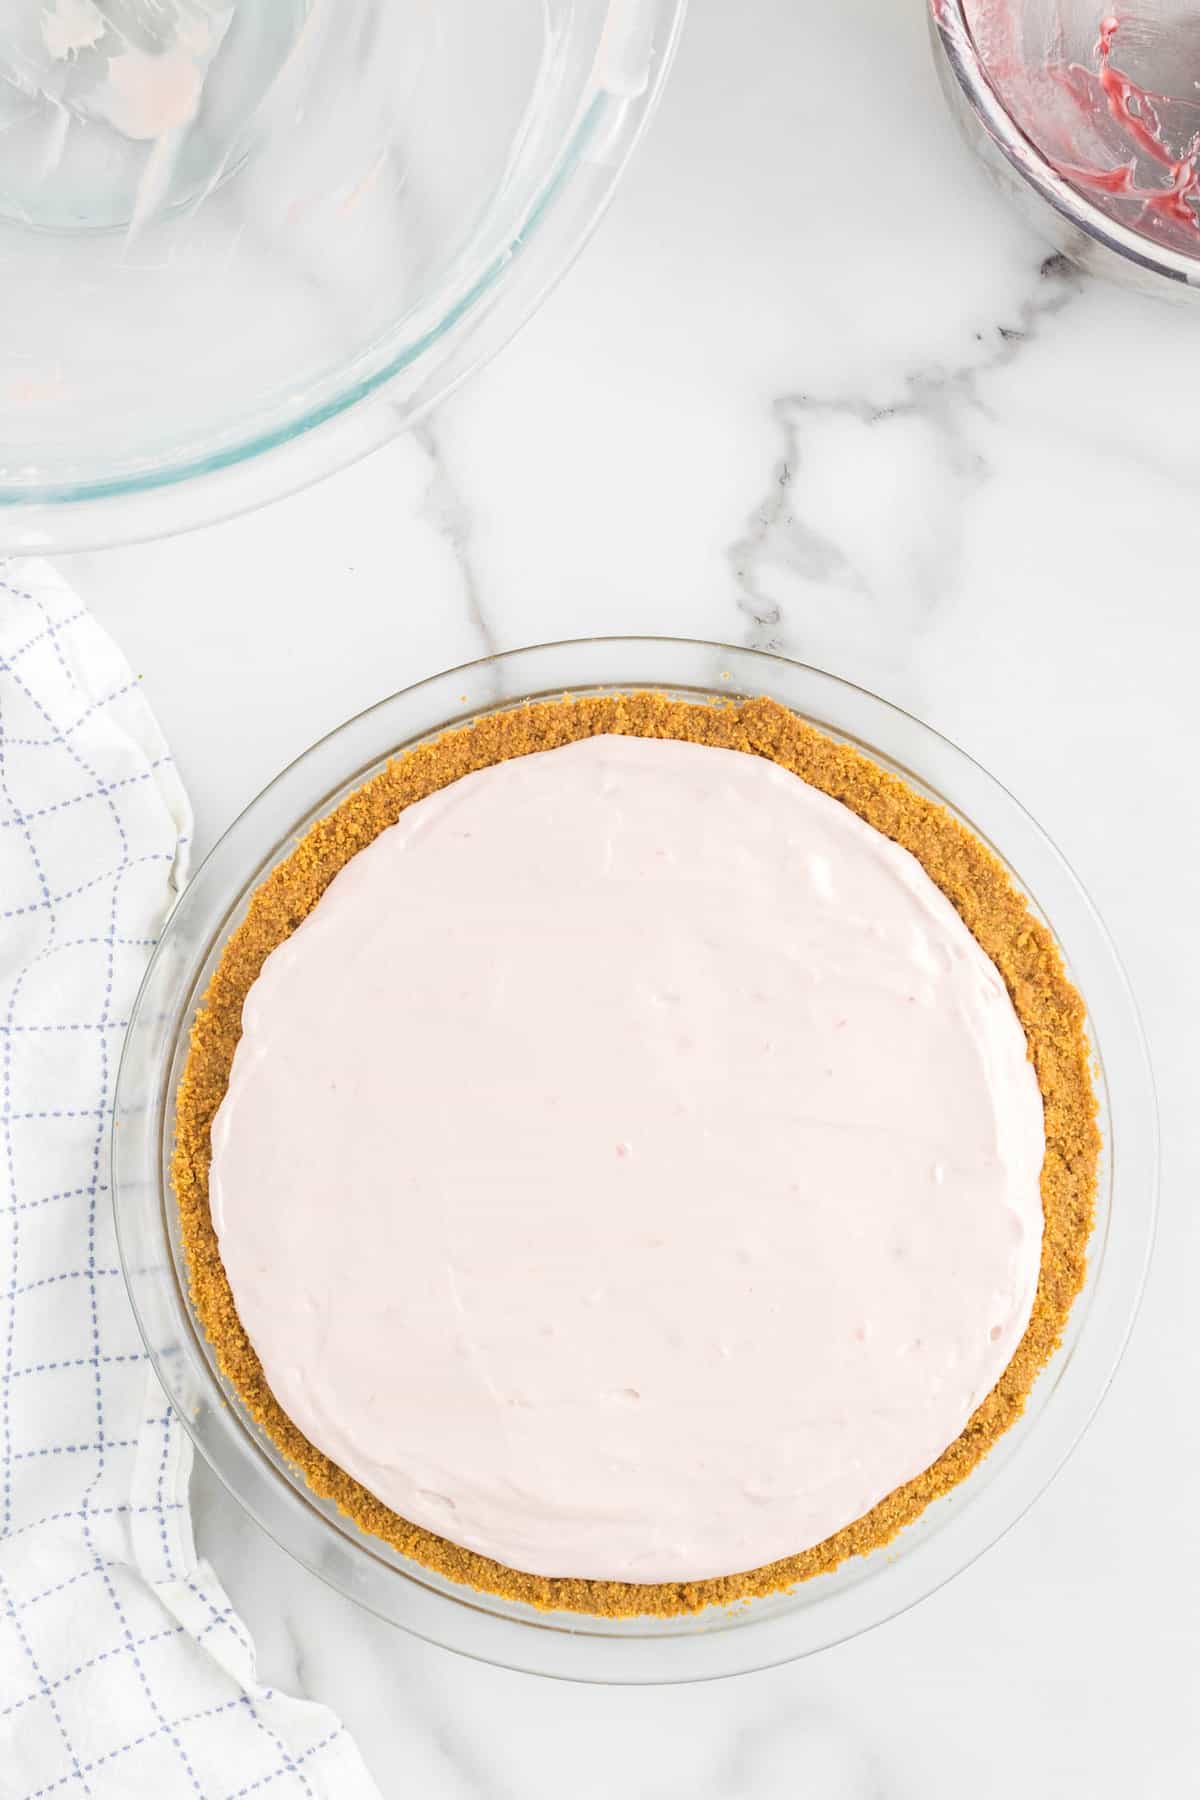 No Bake Strawberry Cheesecake Recipe Ready to Set in Crust